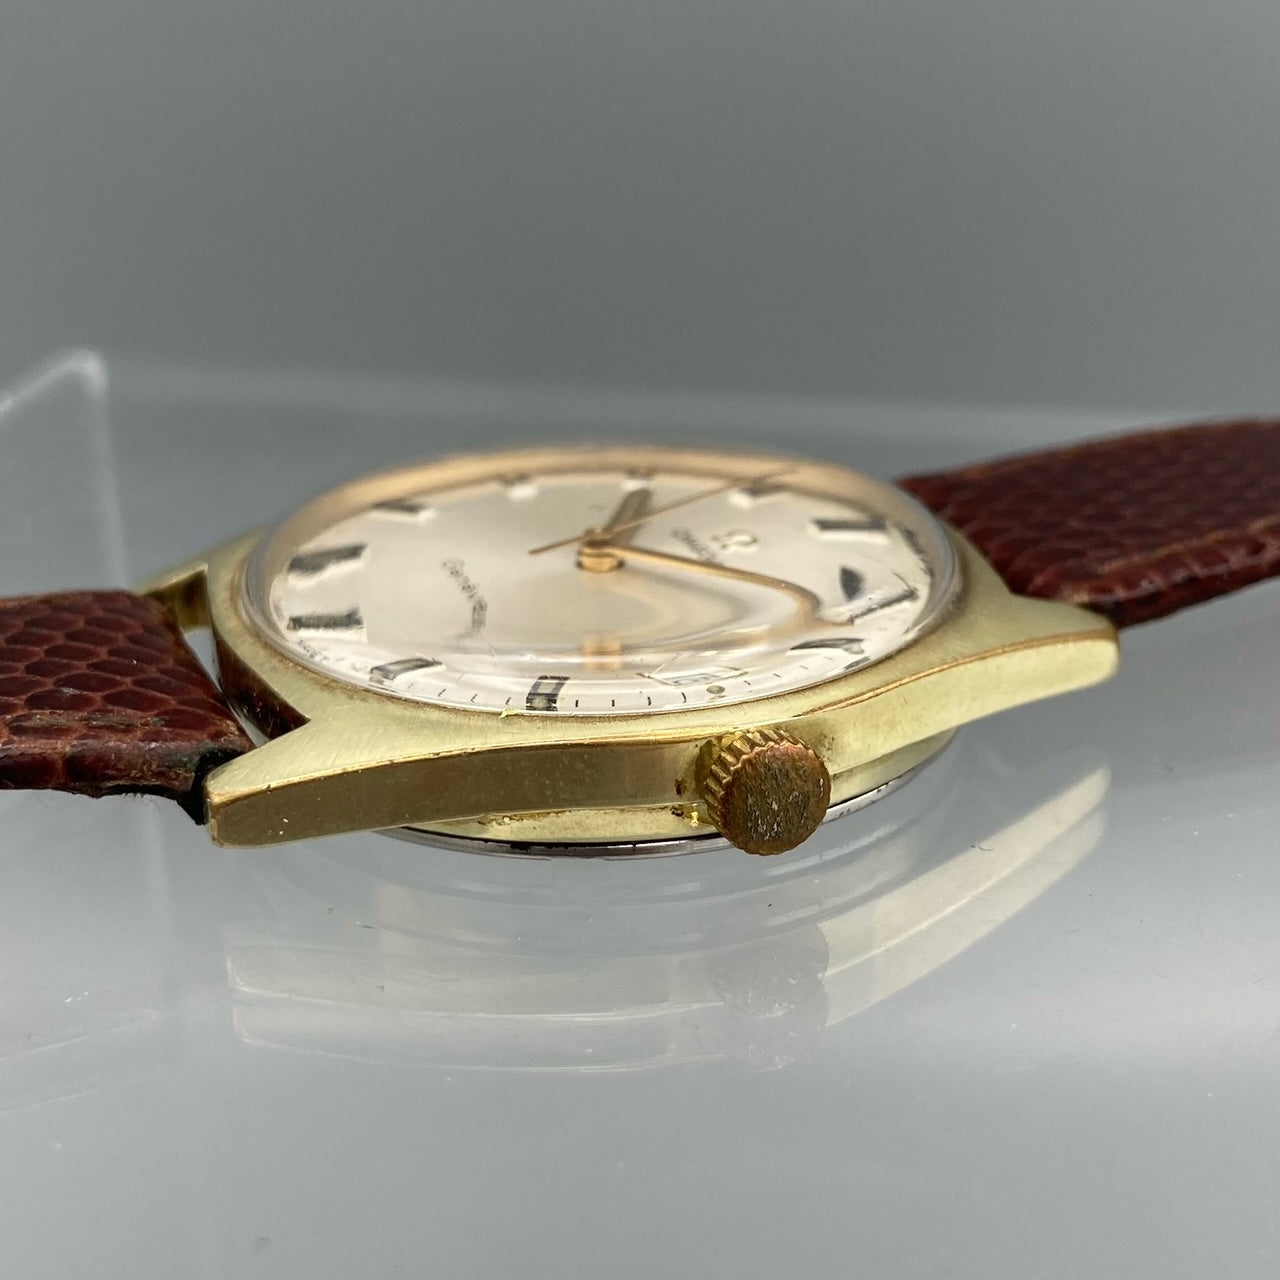 Vintage Omega Geneve Manual Wind Watch 136.041